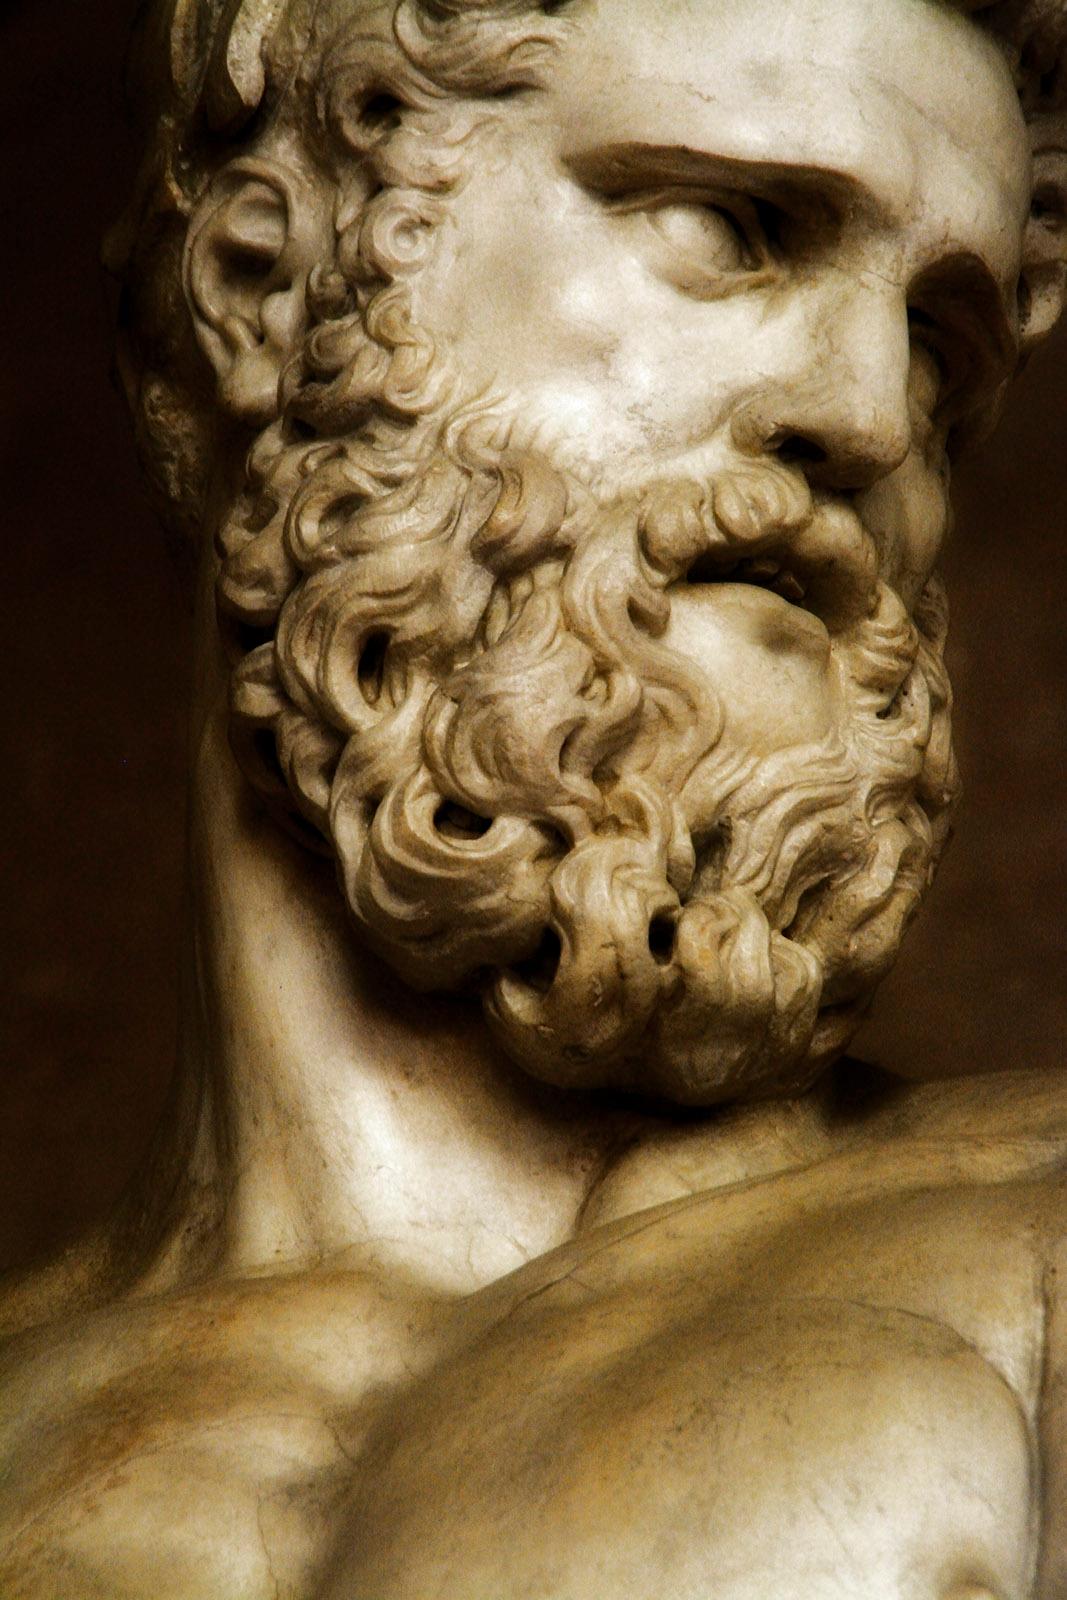 Italia 4 - Signed limited edition print, Gold light, Sculpture, Greek, Mythology